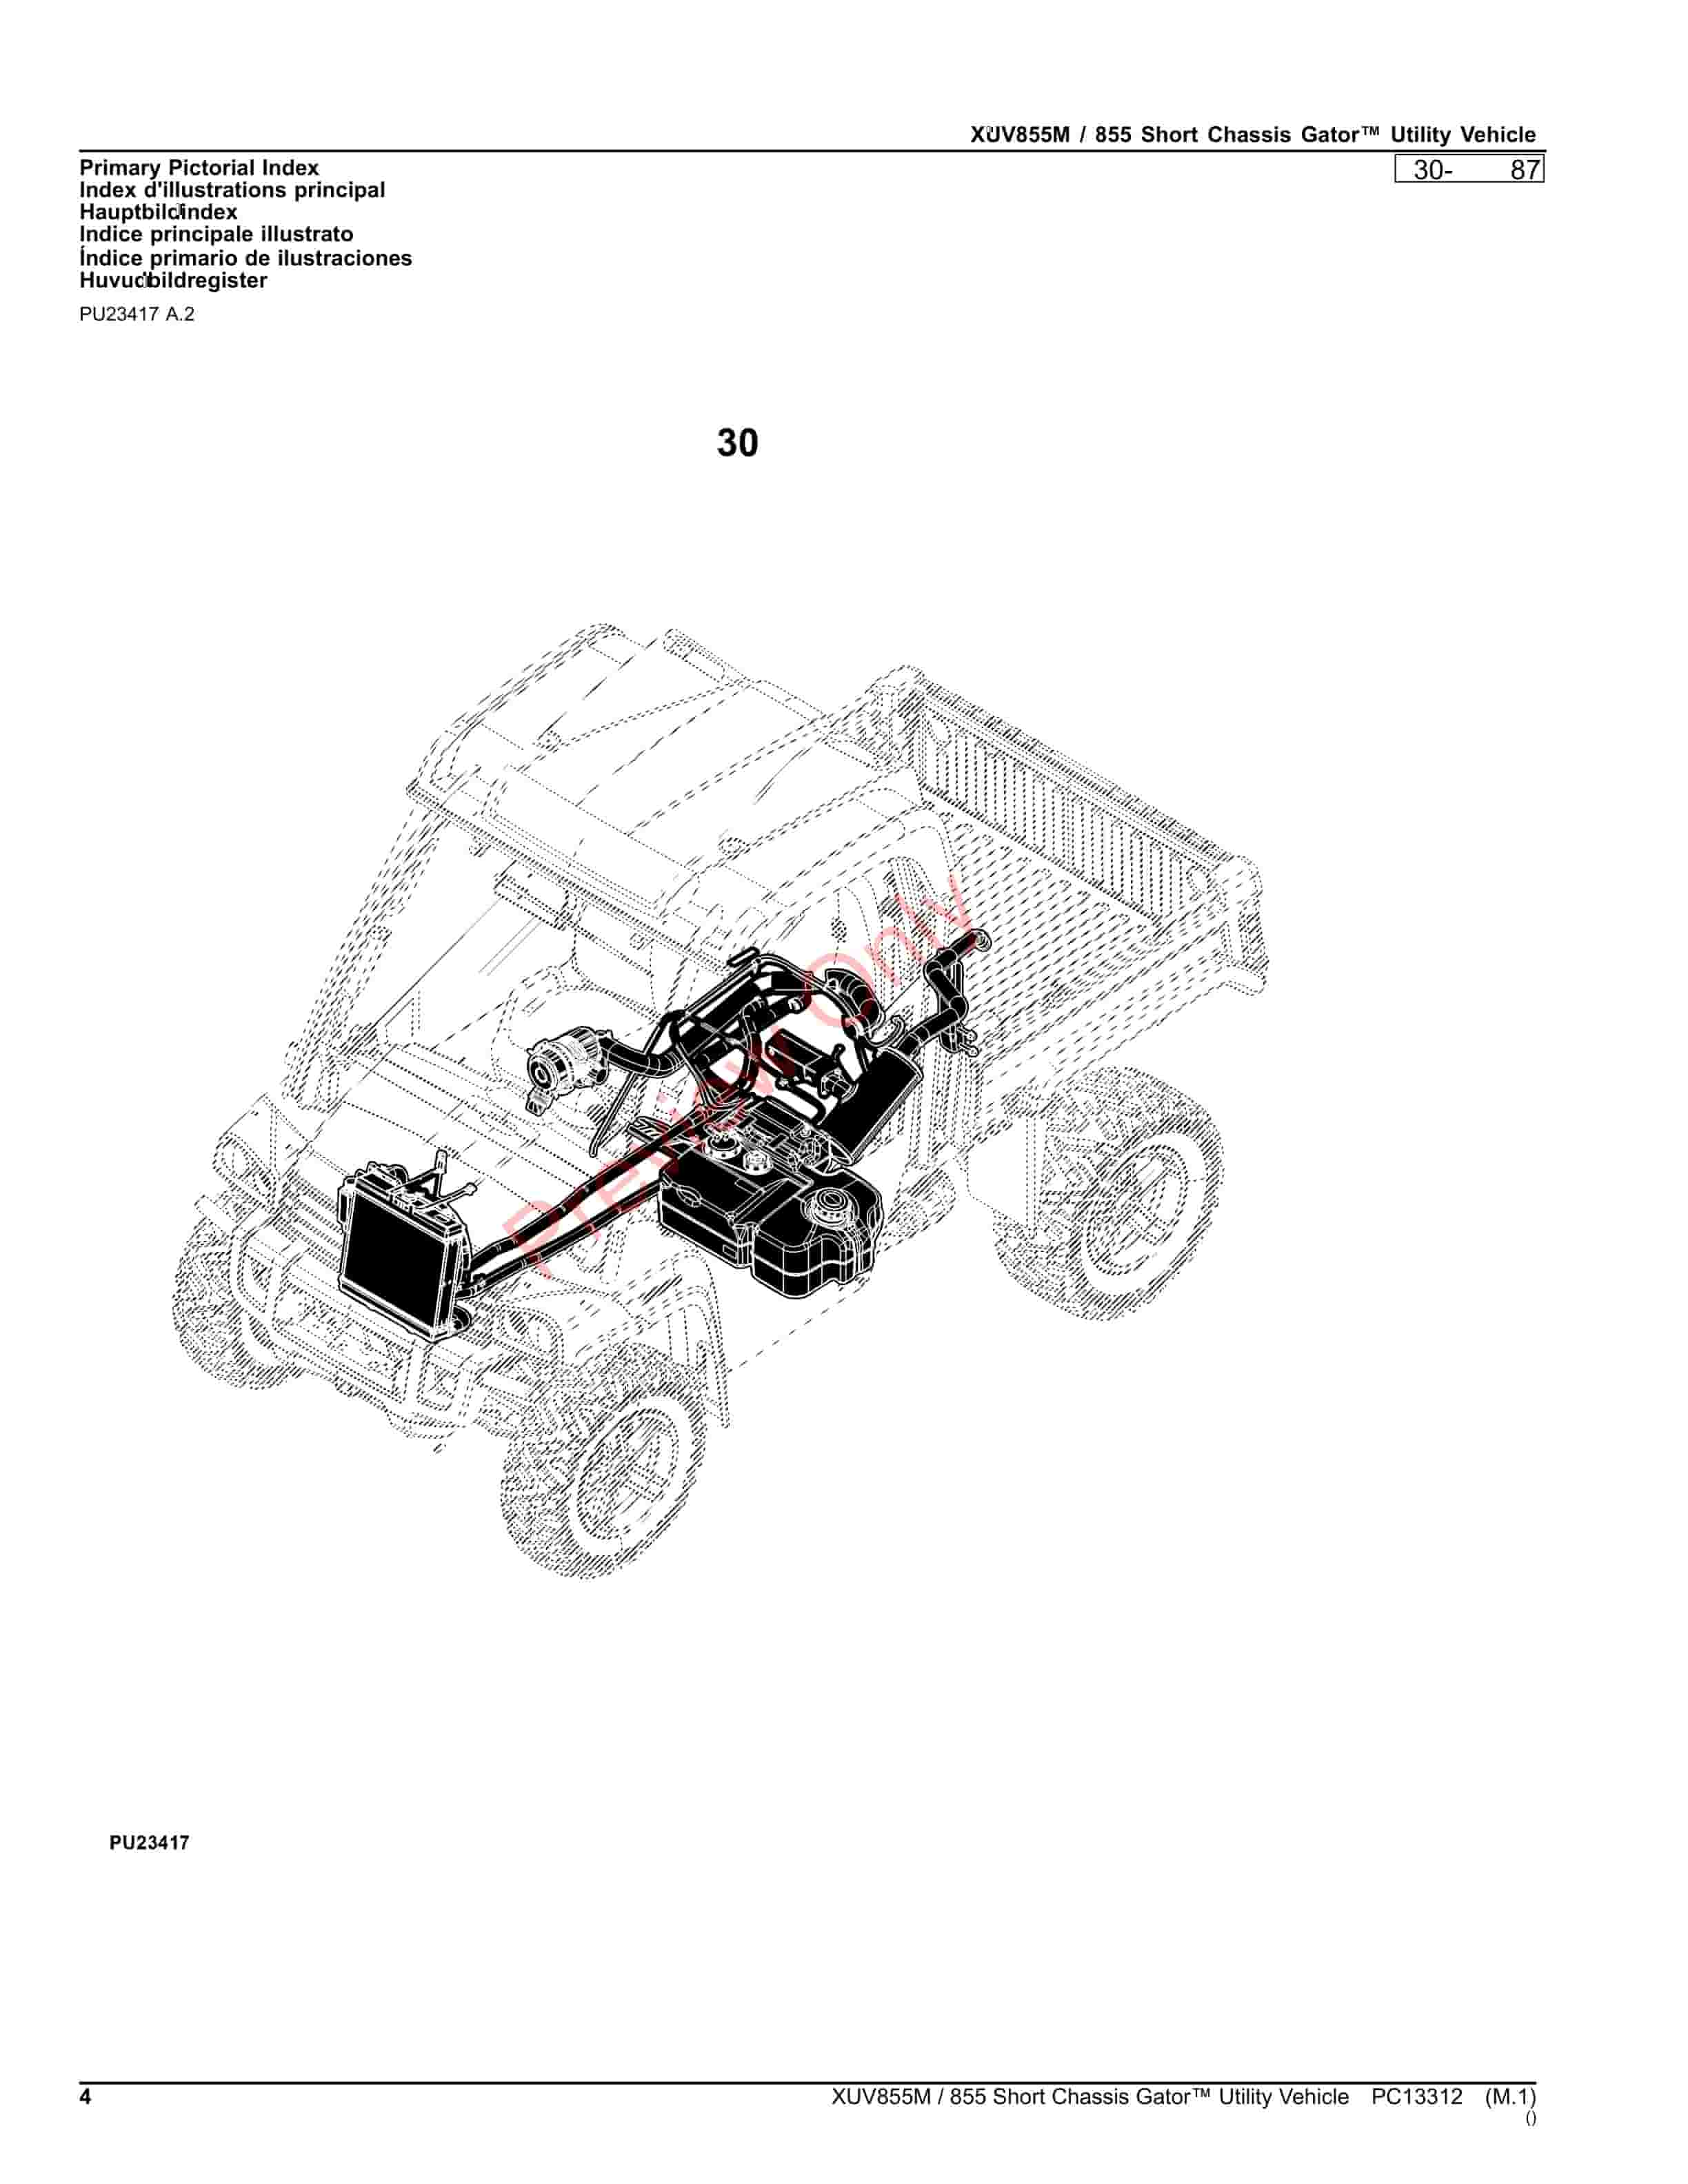 John Deere XUV855M 855 Short Chassis Gator Utility Vehicle Parts Catalog PC13312 14SEP23-4